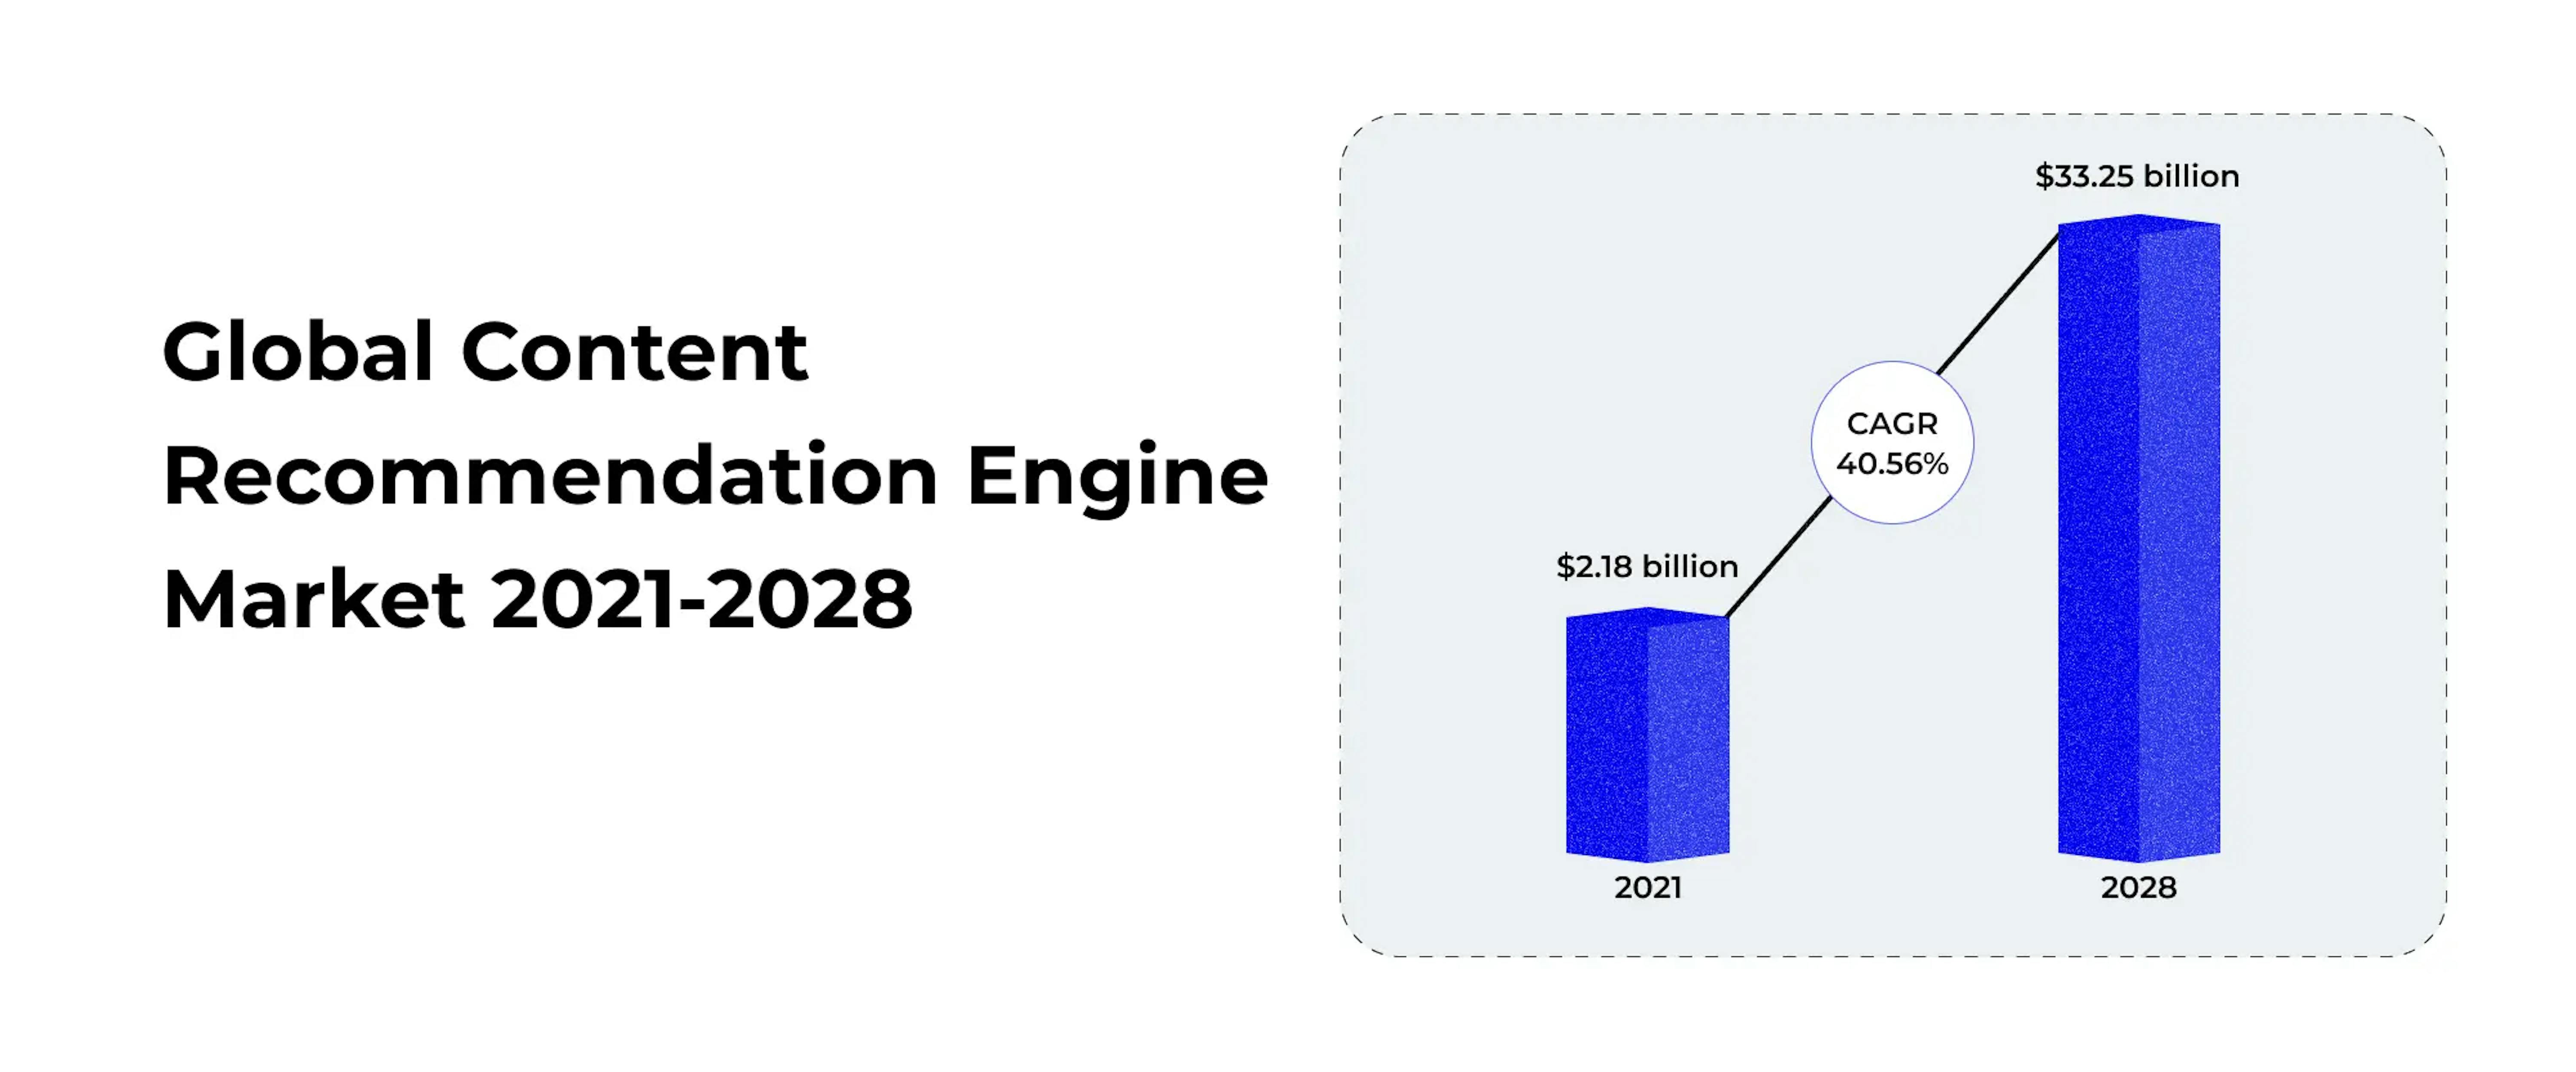 Global Content recommendation engine market 2021-2028